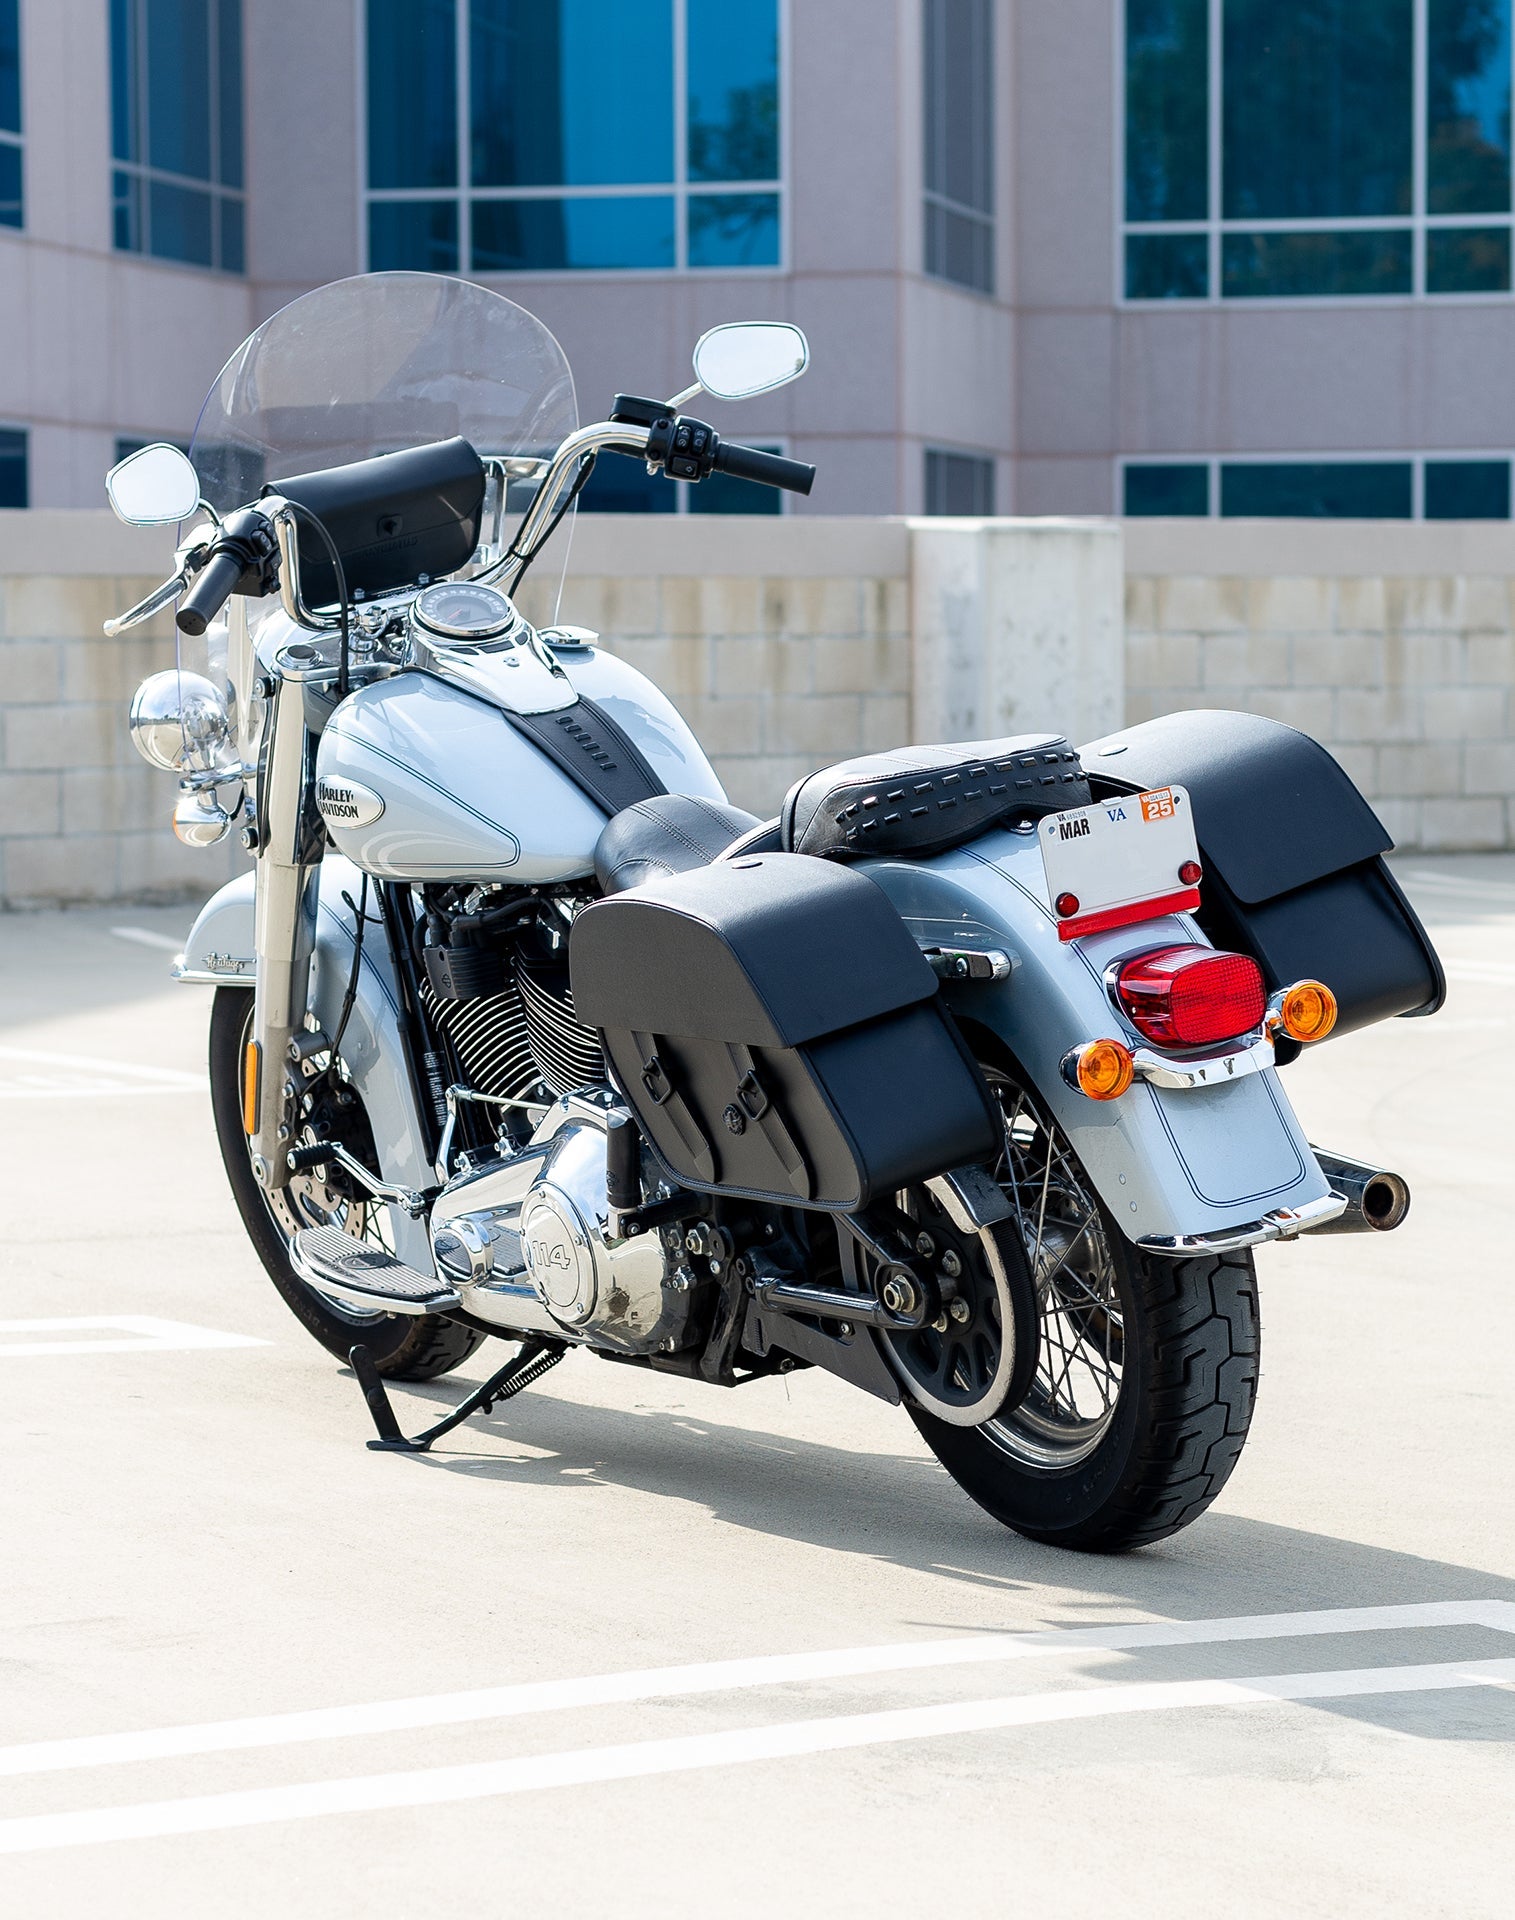 Viking Baelor Large Leather Motorcycle Saddlebags For Harley Davidson Softail Heritage Flst I C Ci are Durable